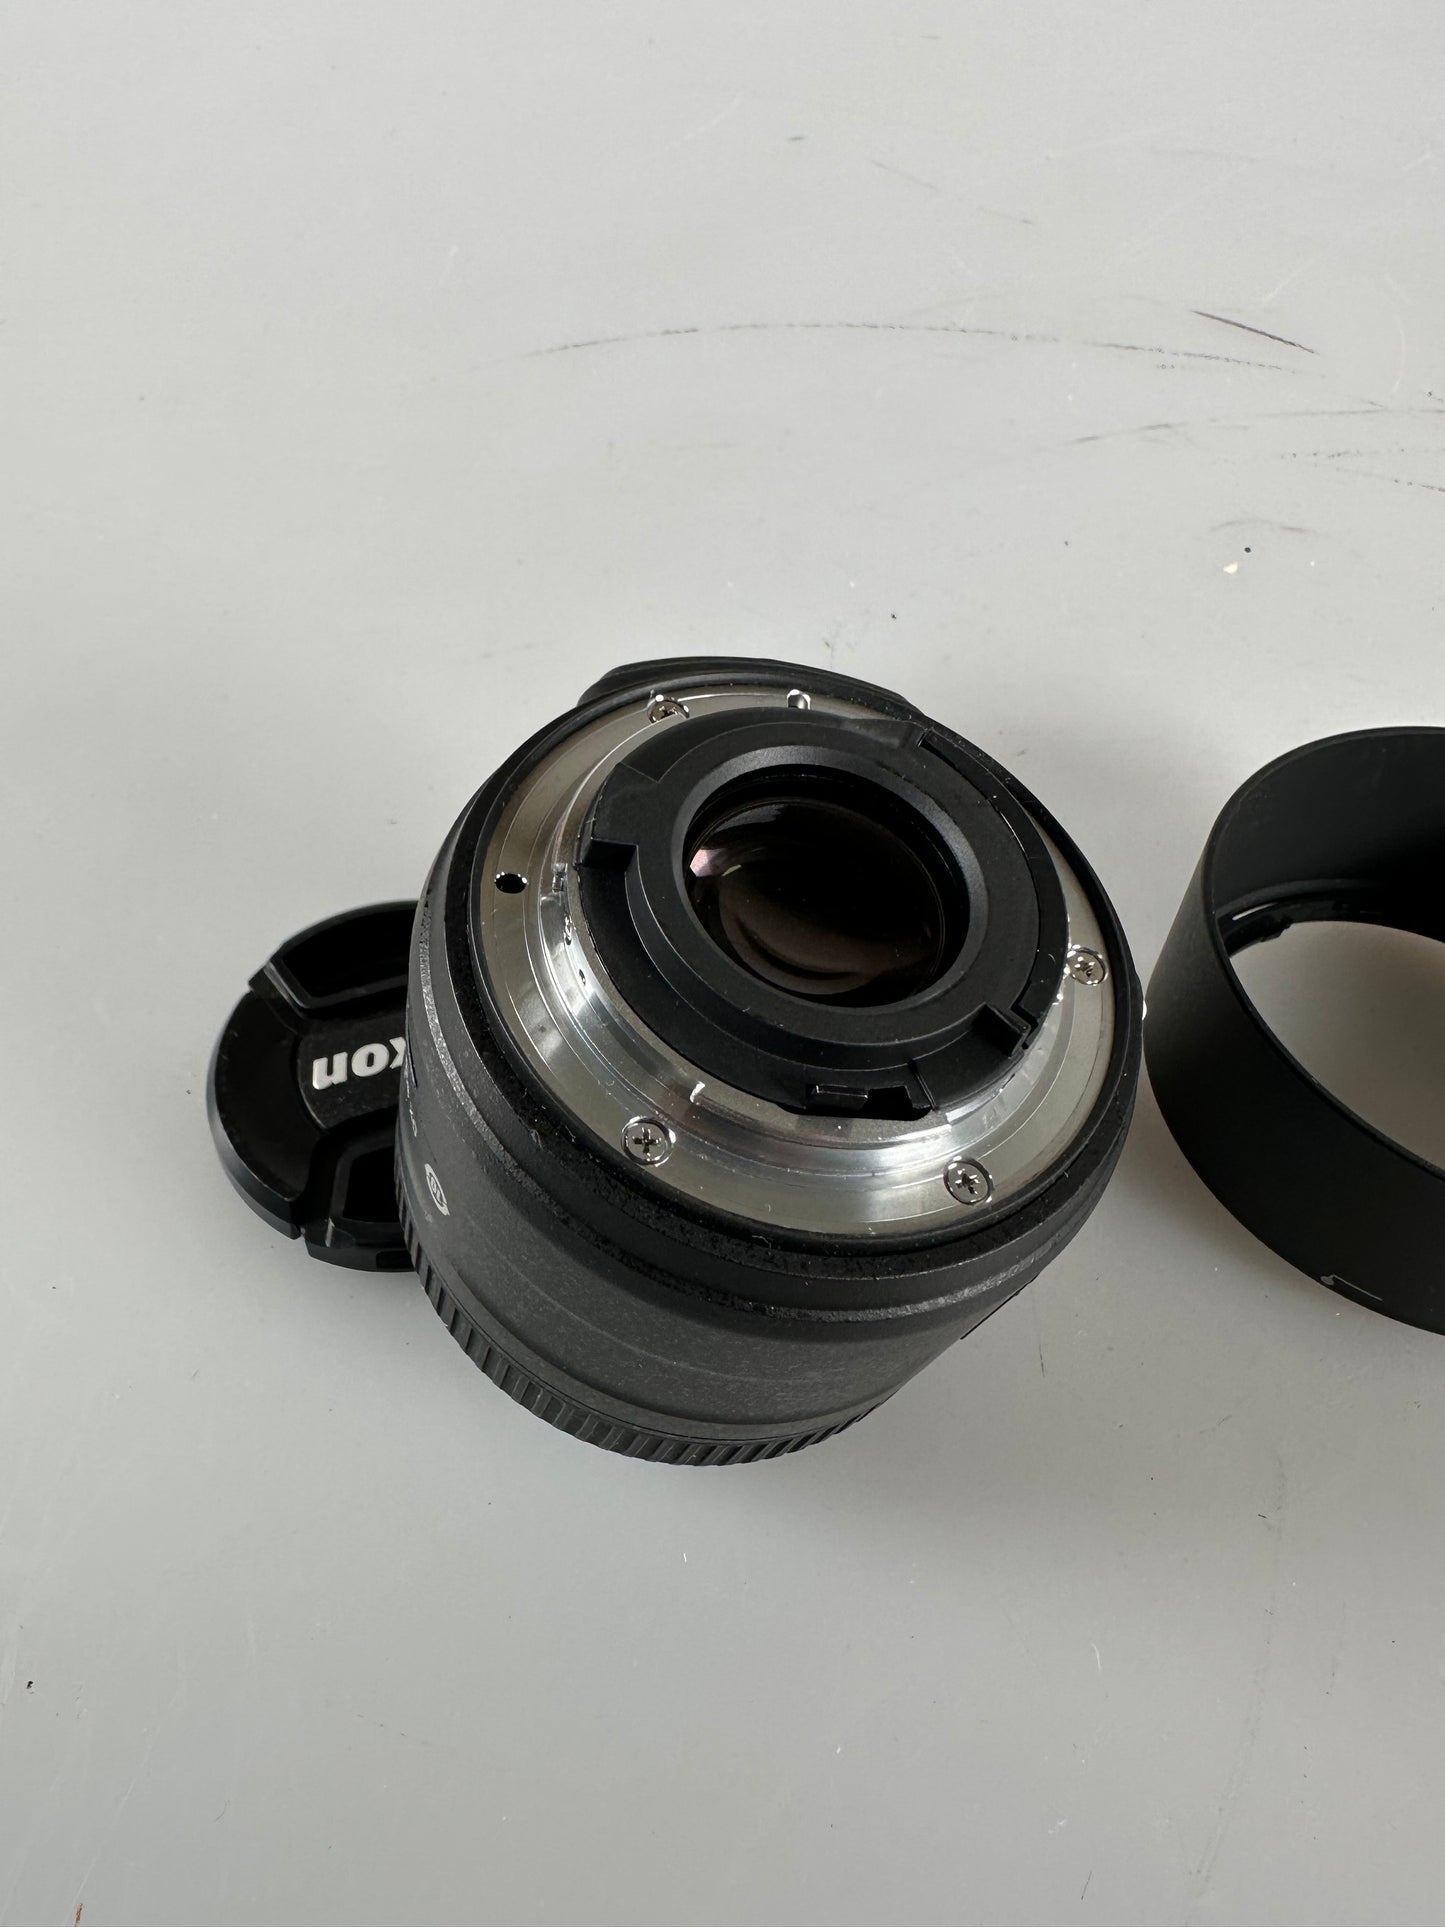 Nikon AF-S DX Micro Nikkor 40mm f2.8 G Macro Lens